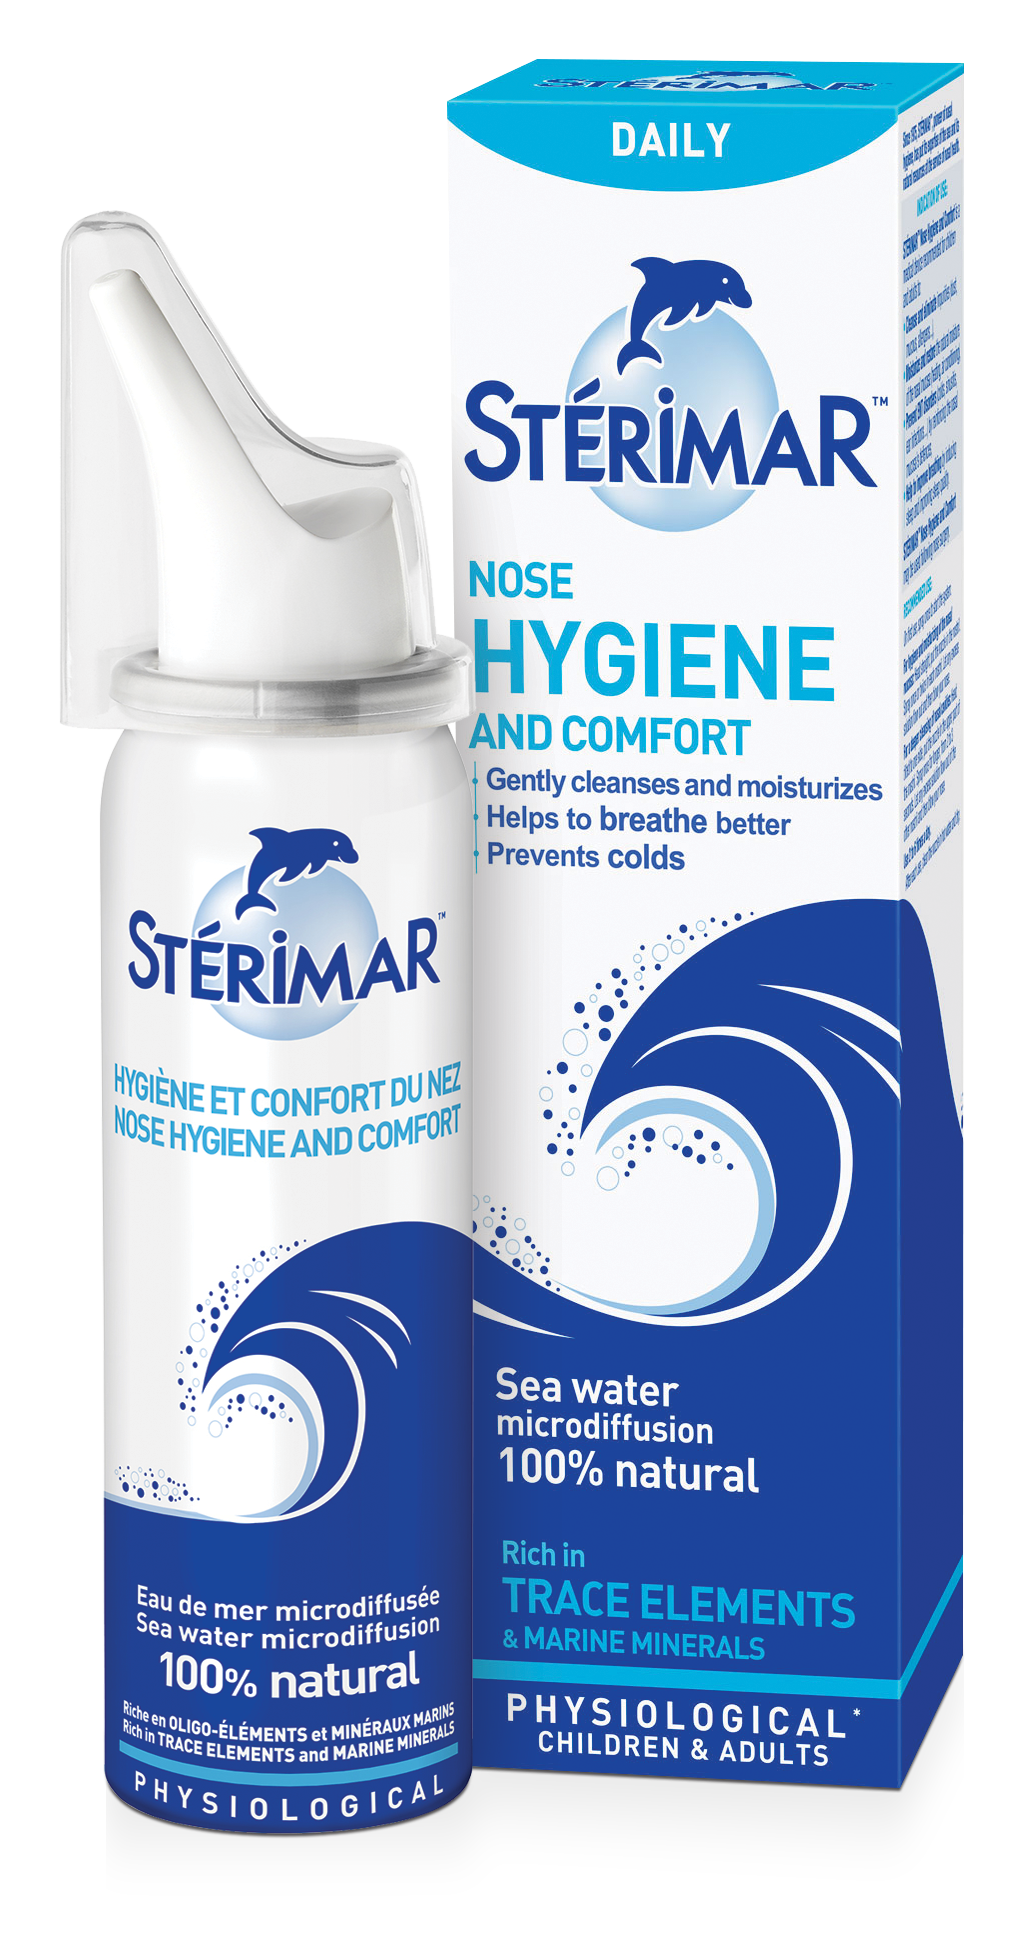 Xit mũi Sterima cá heo - Sterimar Nose Hygiene And Comfort